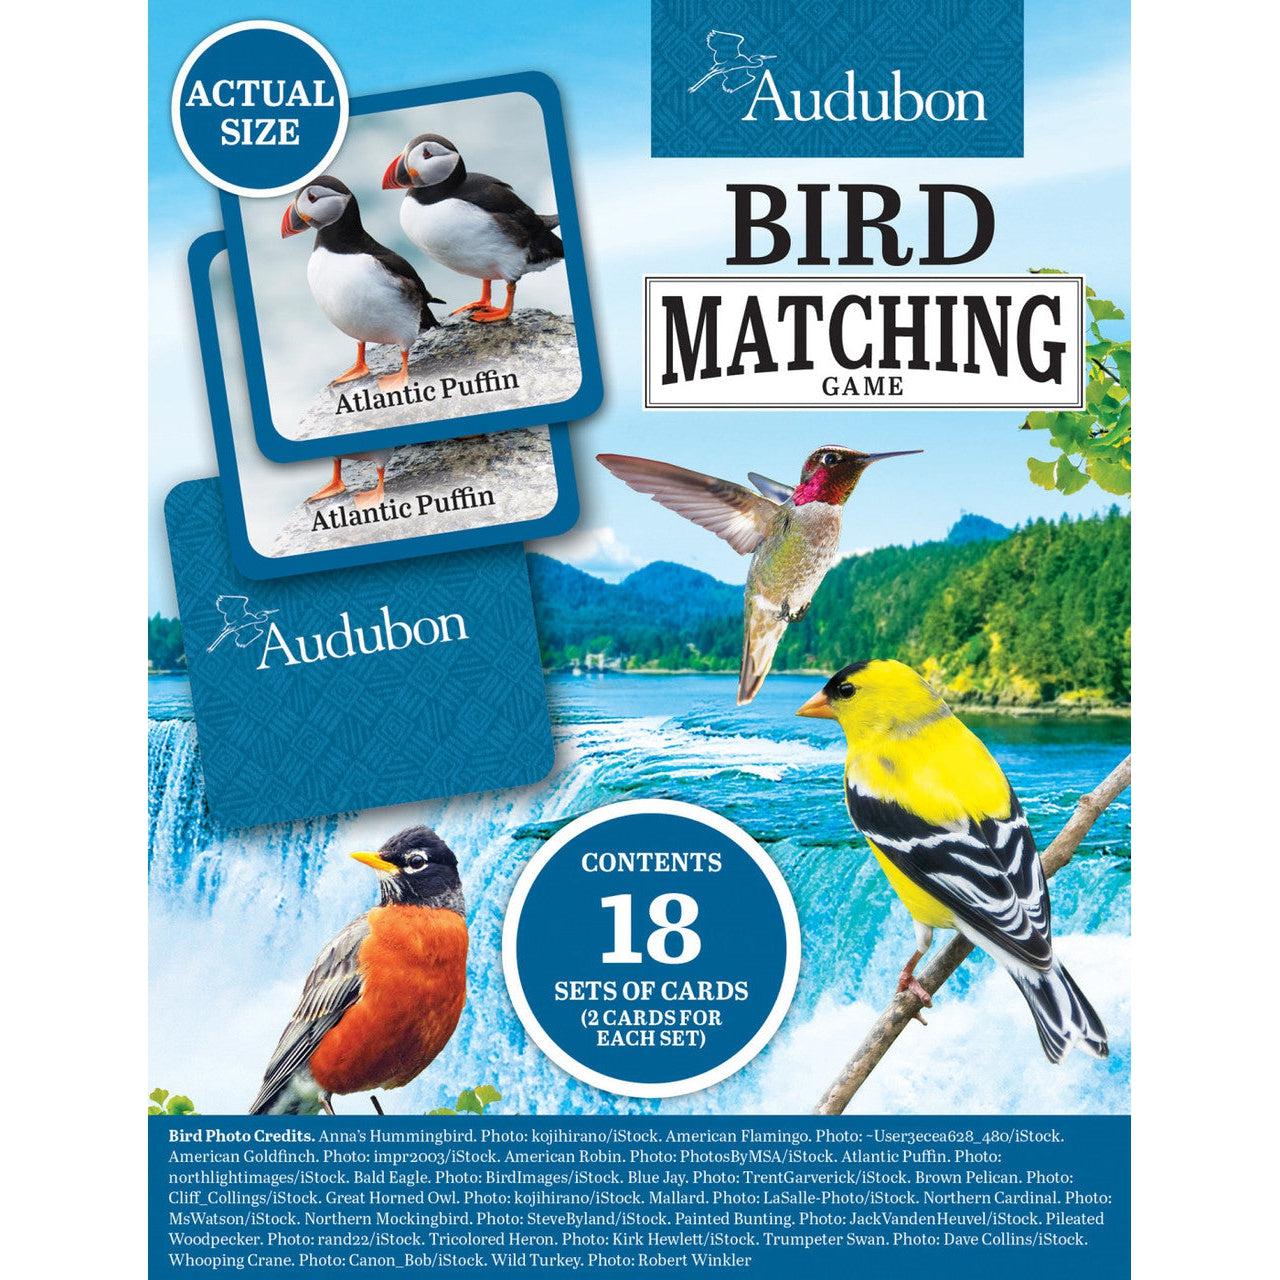 MasterPieces-Audubon Matching Game-42323-Legacy Toys